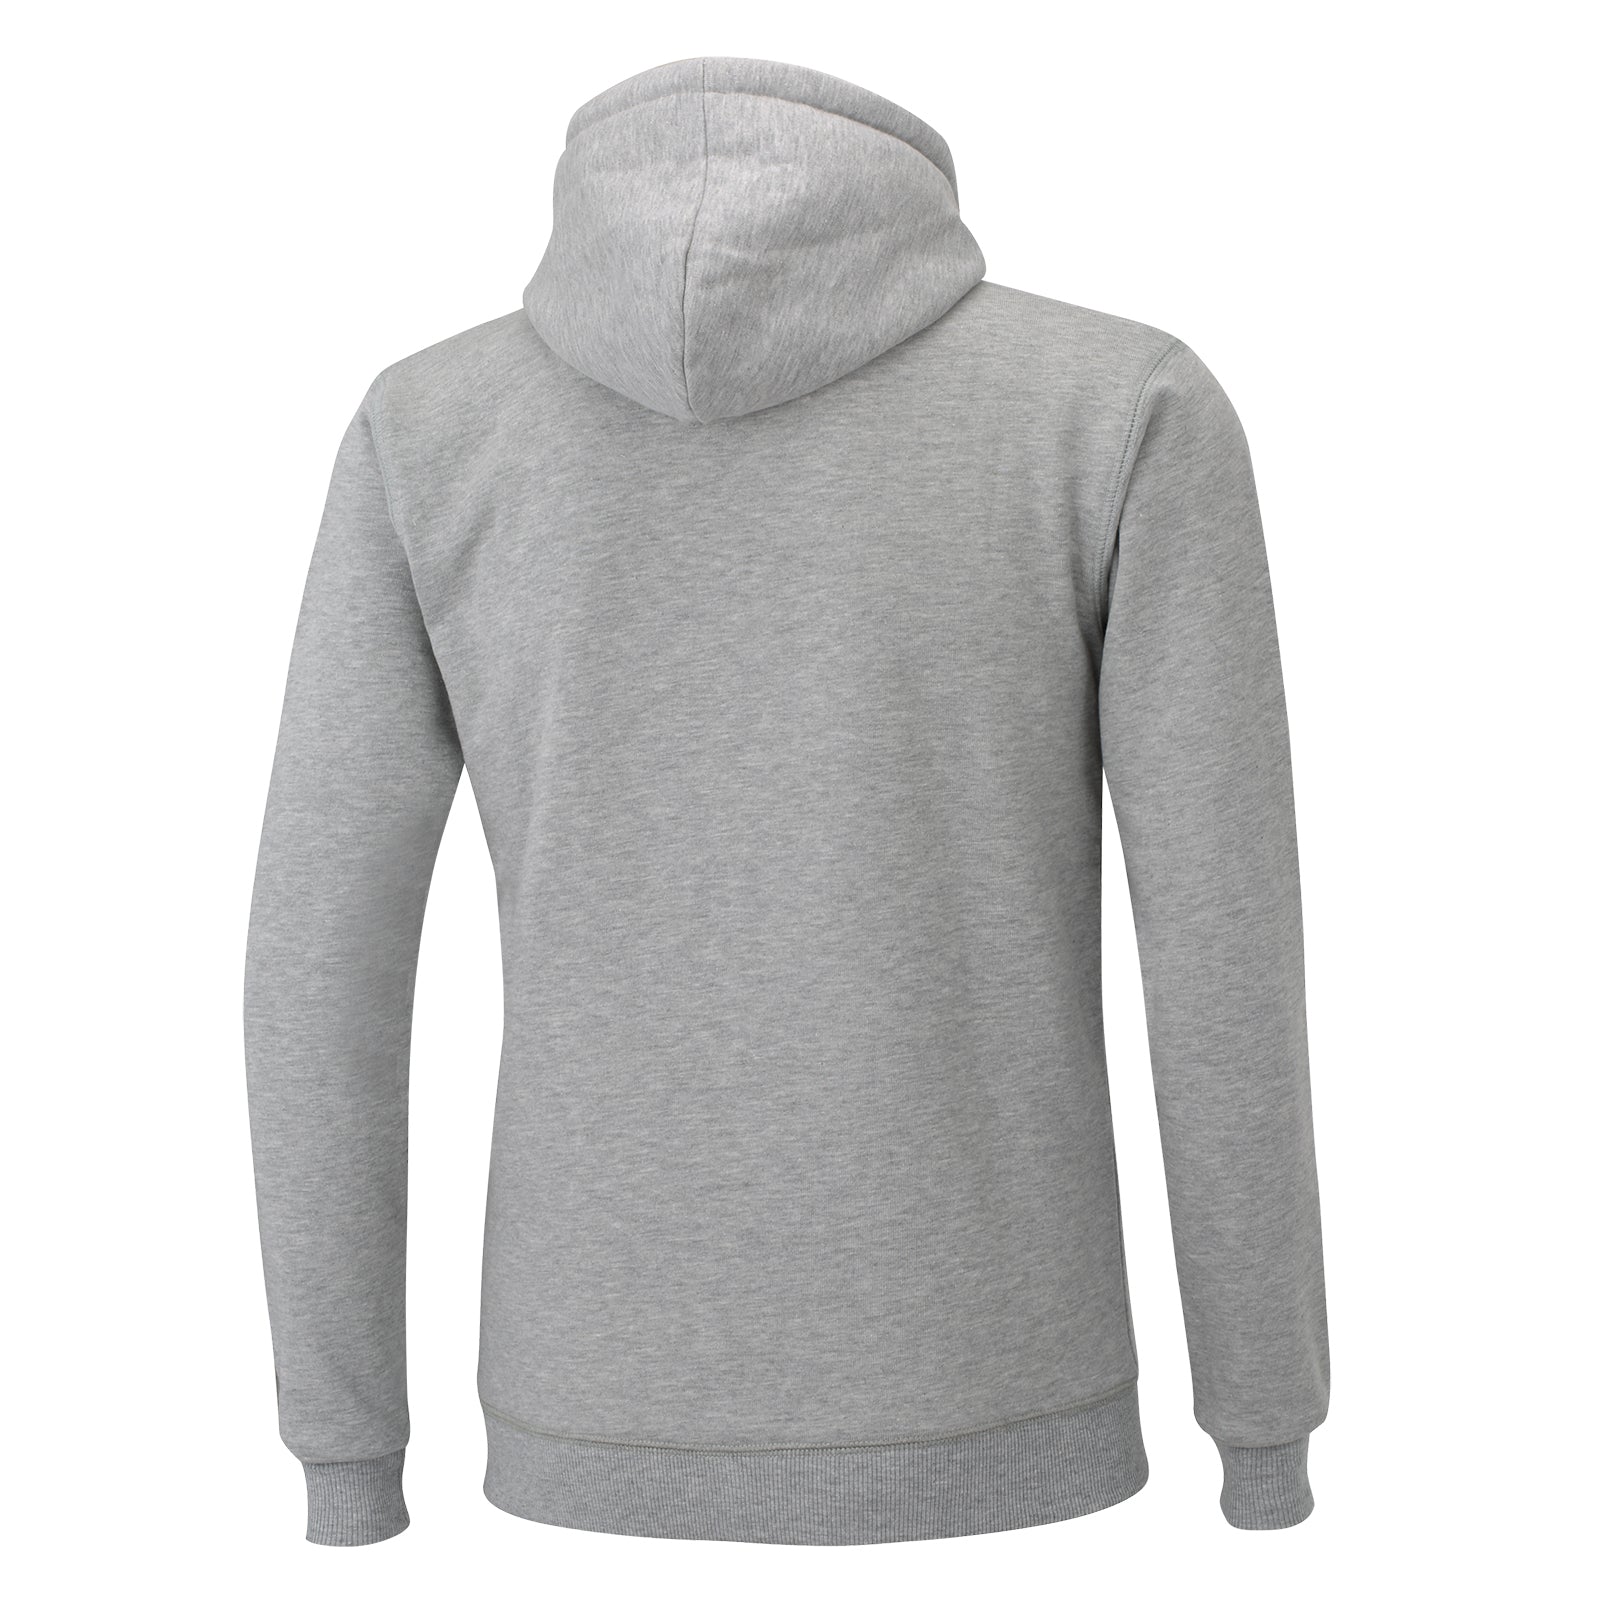 Sweatshirt-winter-thermo-pro-hoodie-sweater-herren-damen-s-m-l-xl-xxl-melange-schwarz-back